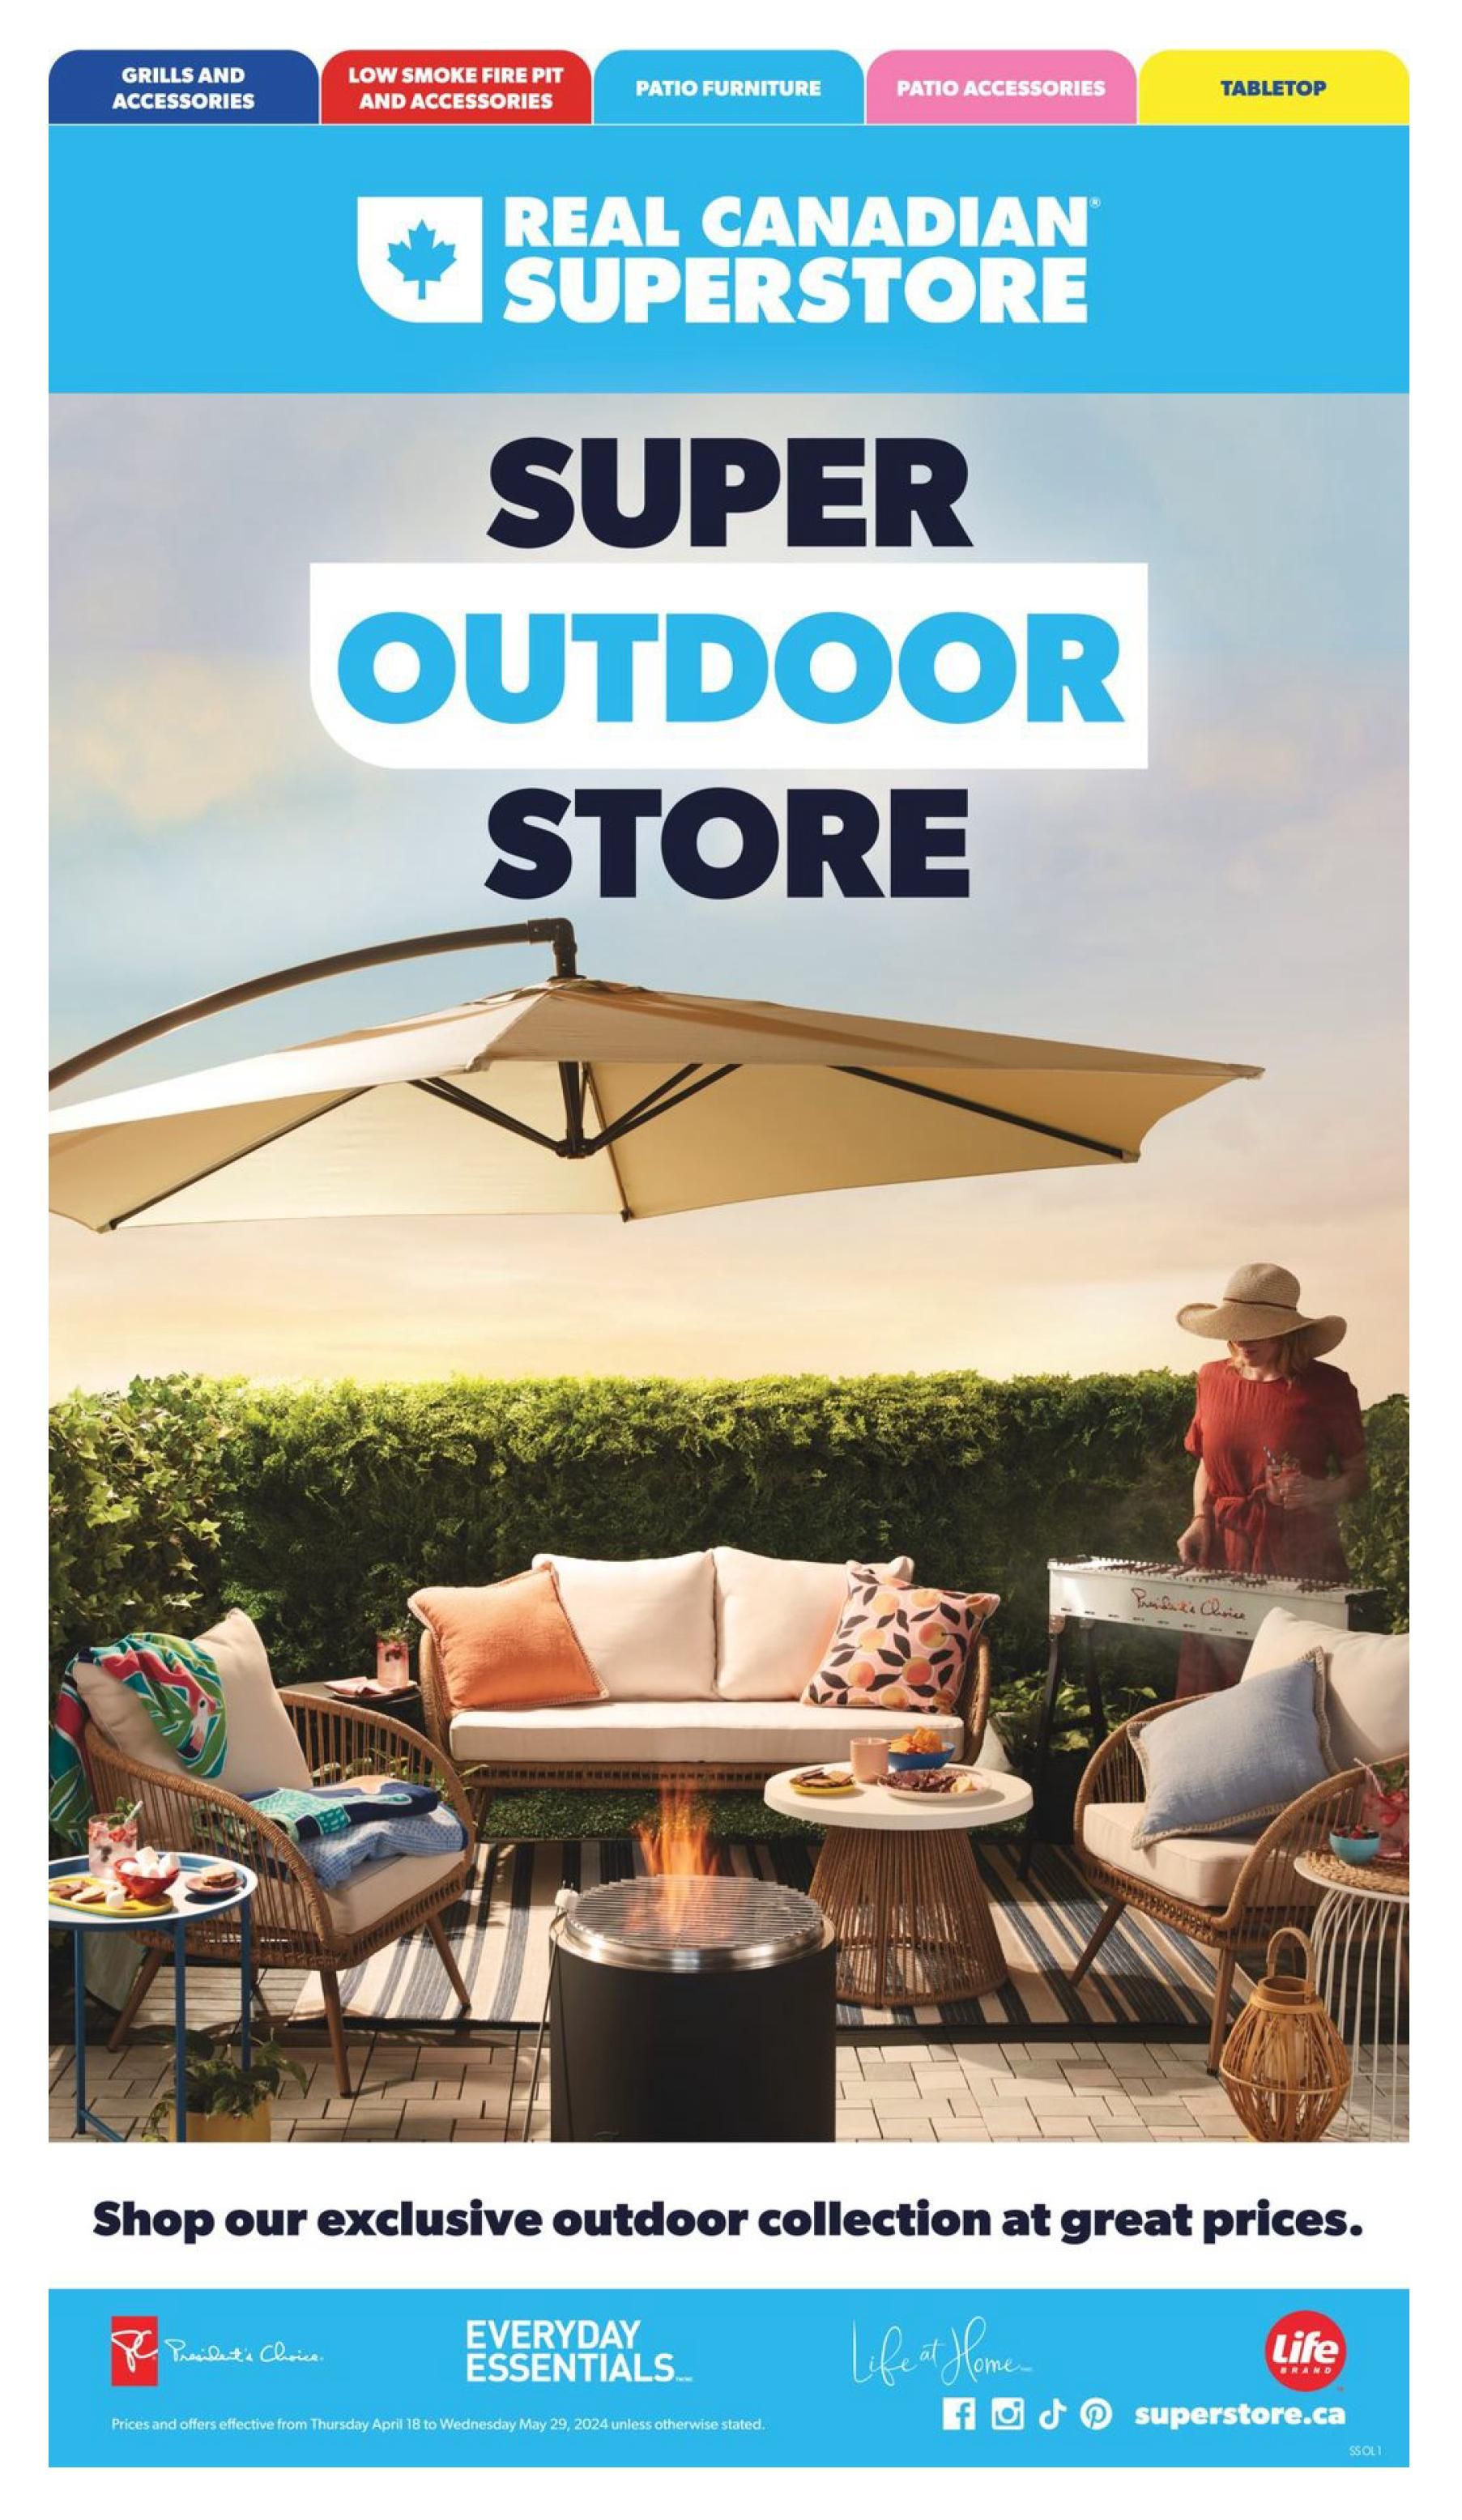 Real Canadian Superstore - Ontario - Super Outdoor Store Specials